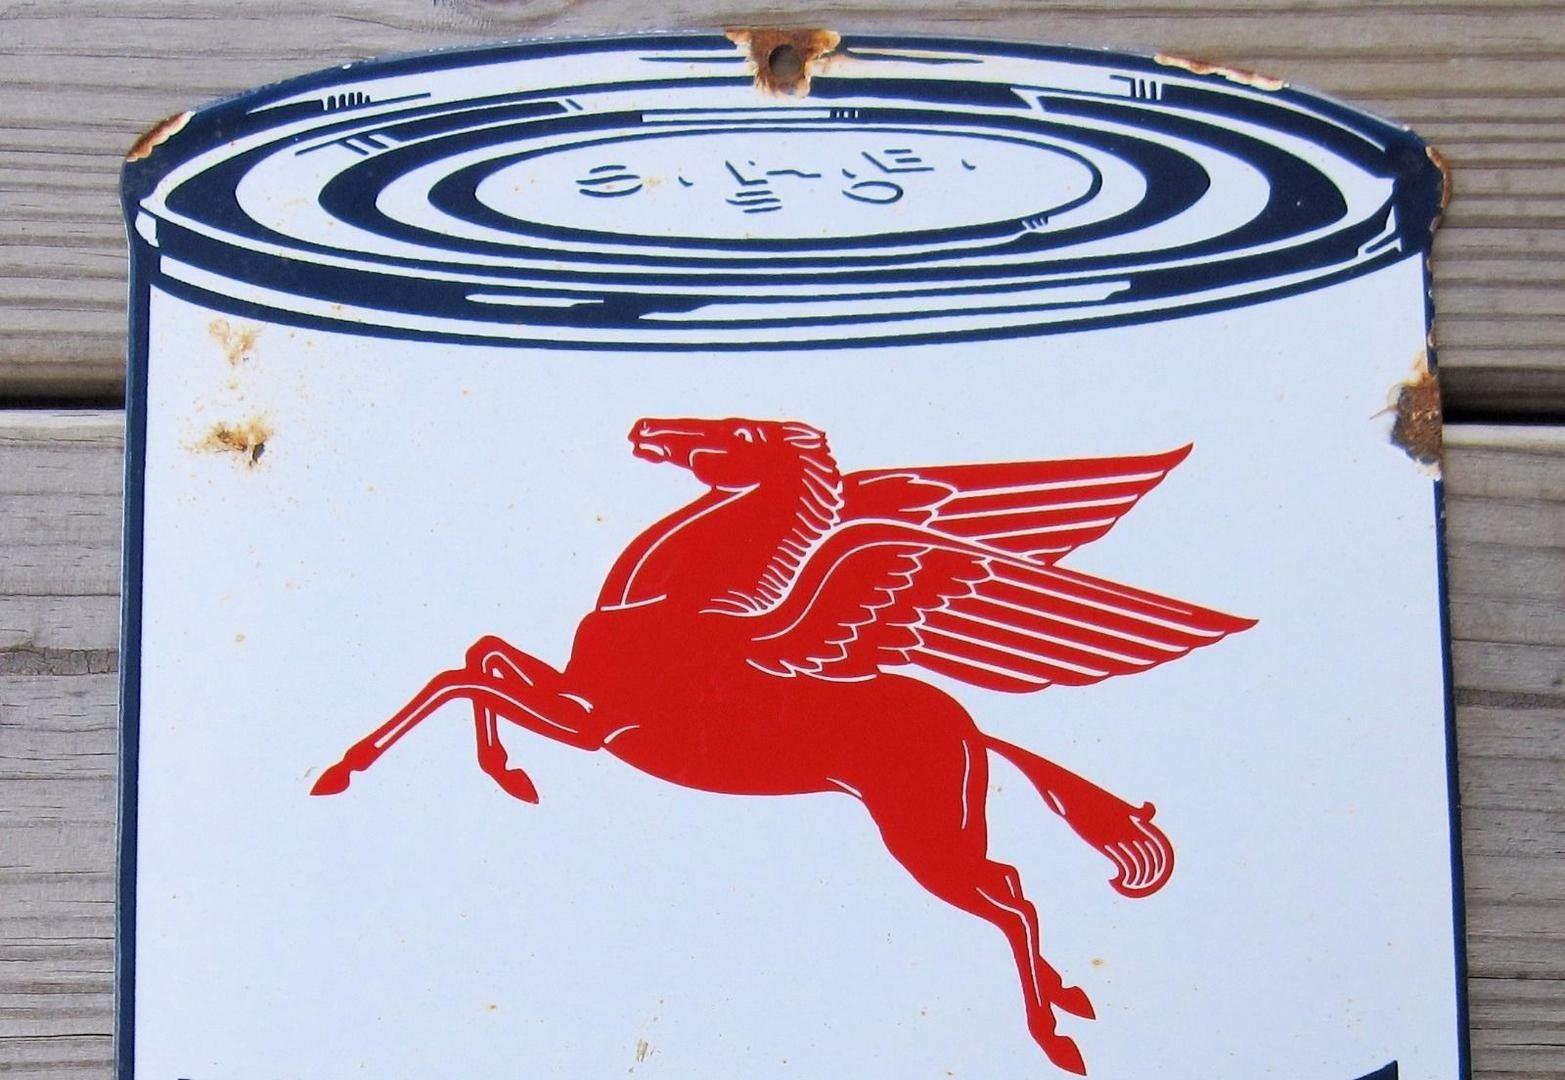 Blue and Red Pegasus Logo - MOBILOIL RED PEGASUS LOGO PORCELAIN ENAMEL OIL CAN GAS LUBESTER